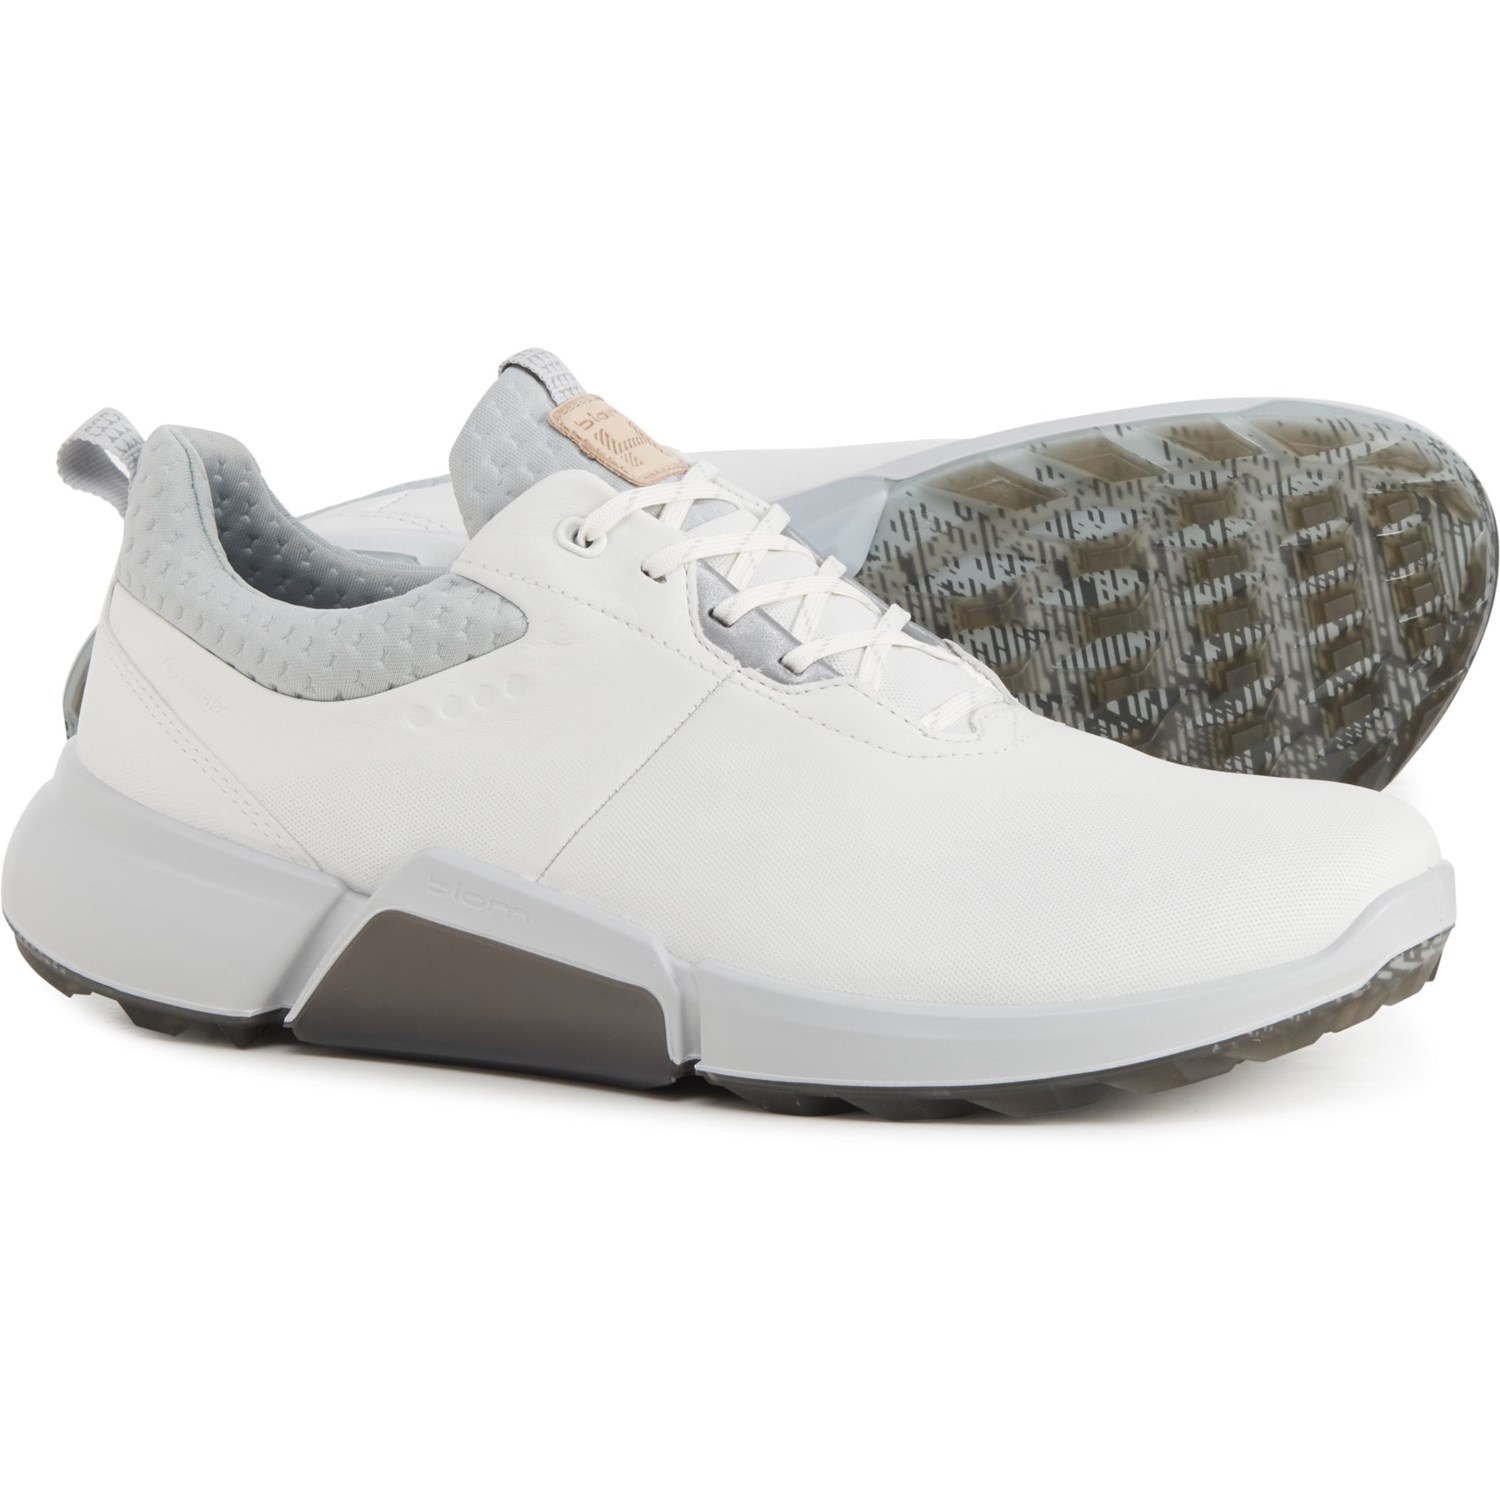 Glad Mew Mew noodsituatie ECCO BIOM® H4 Dritton Gore-Tex® Golf Shoes (For Men) - Save 37%